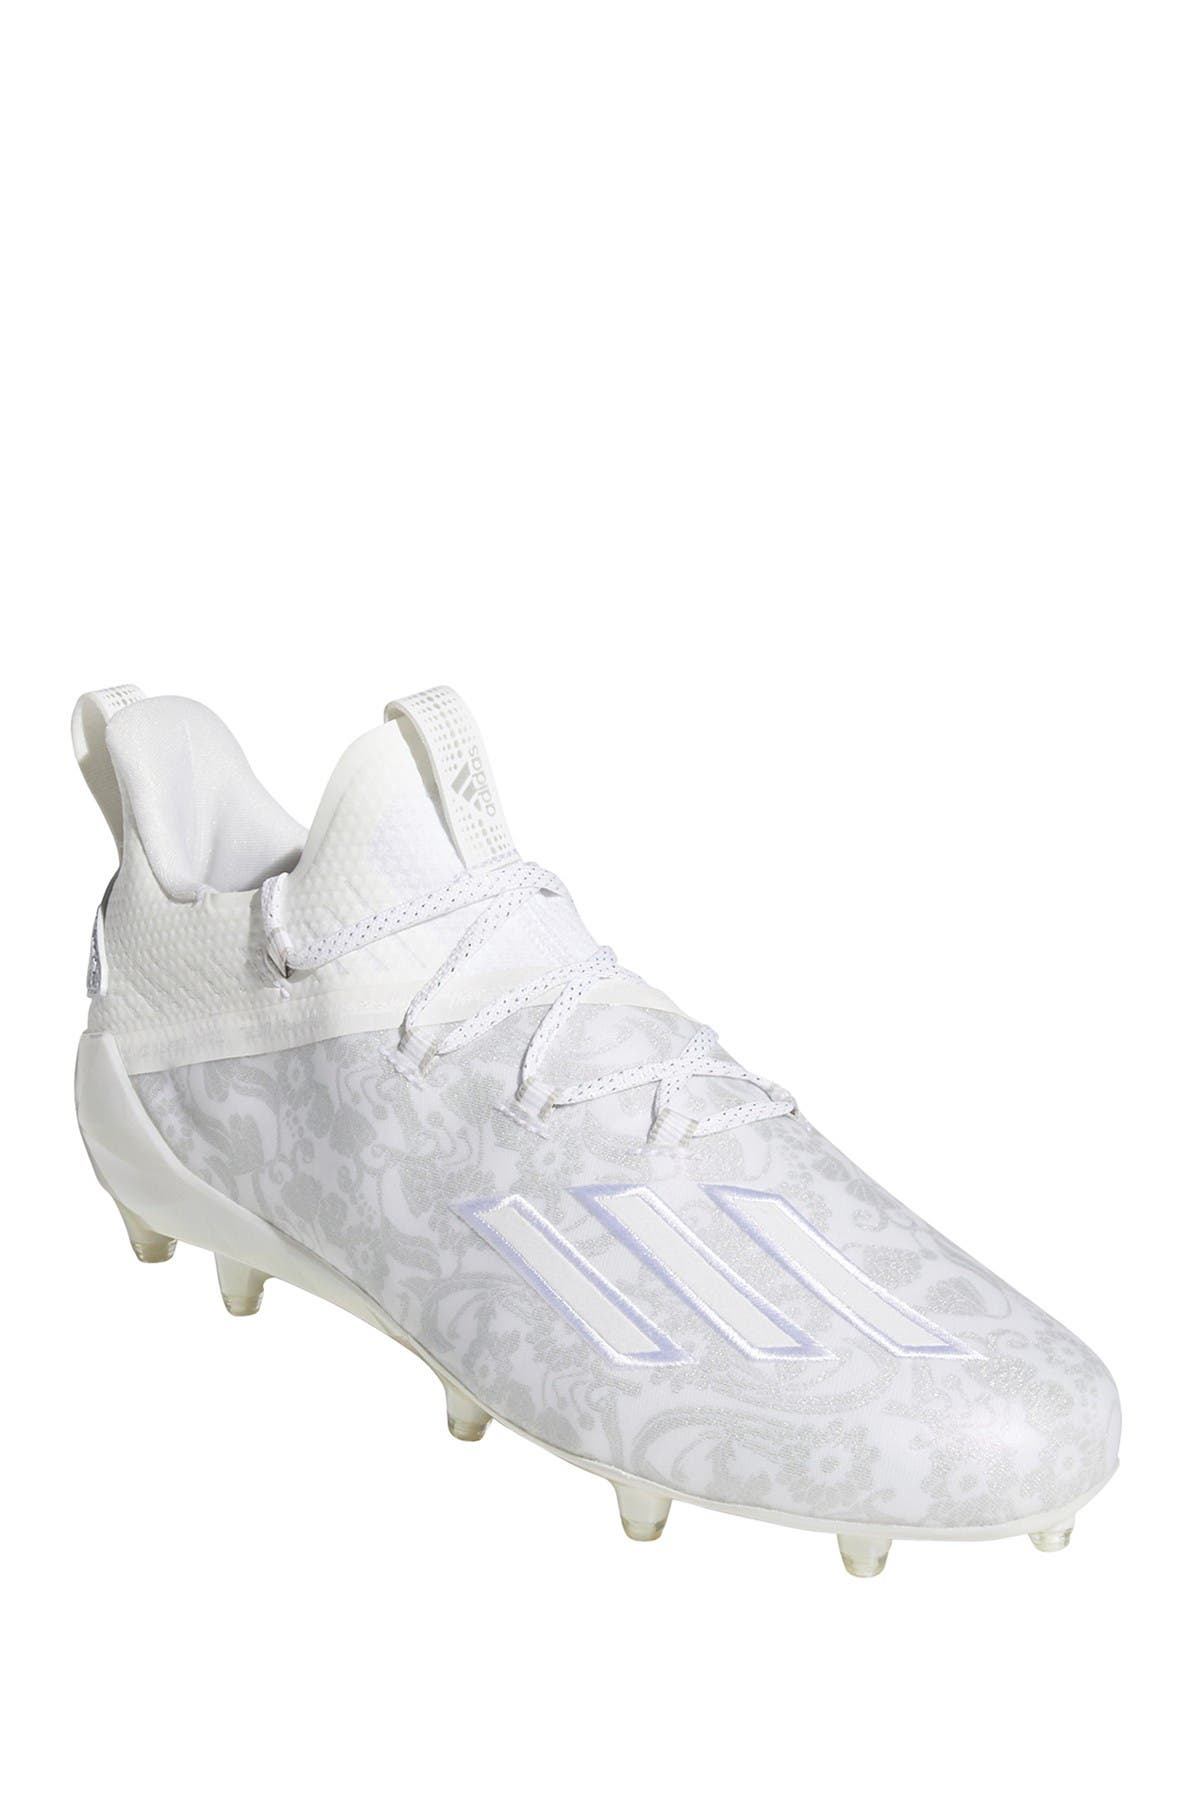 newest adidas football cleats